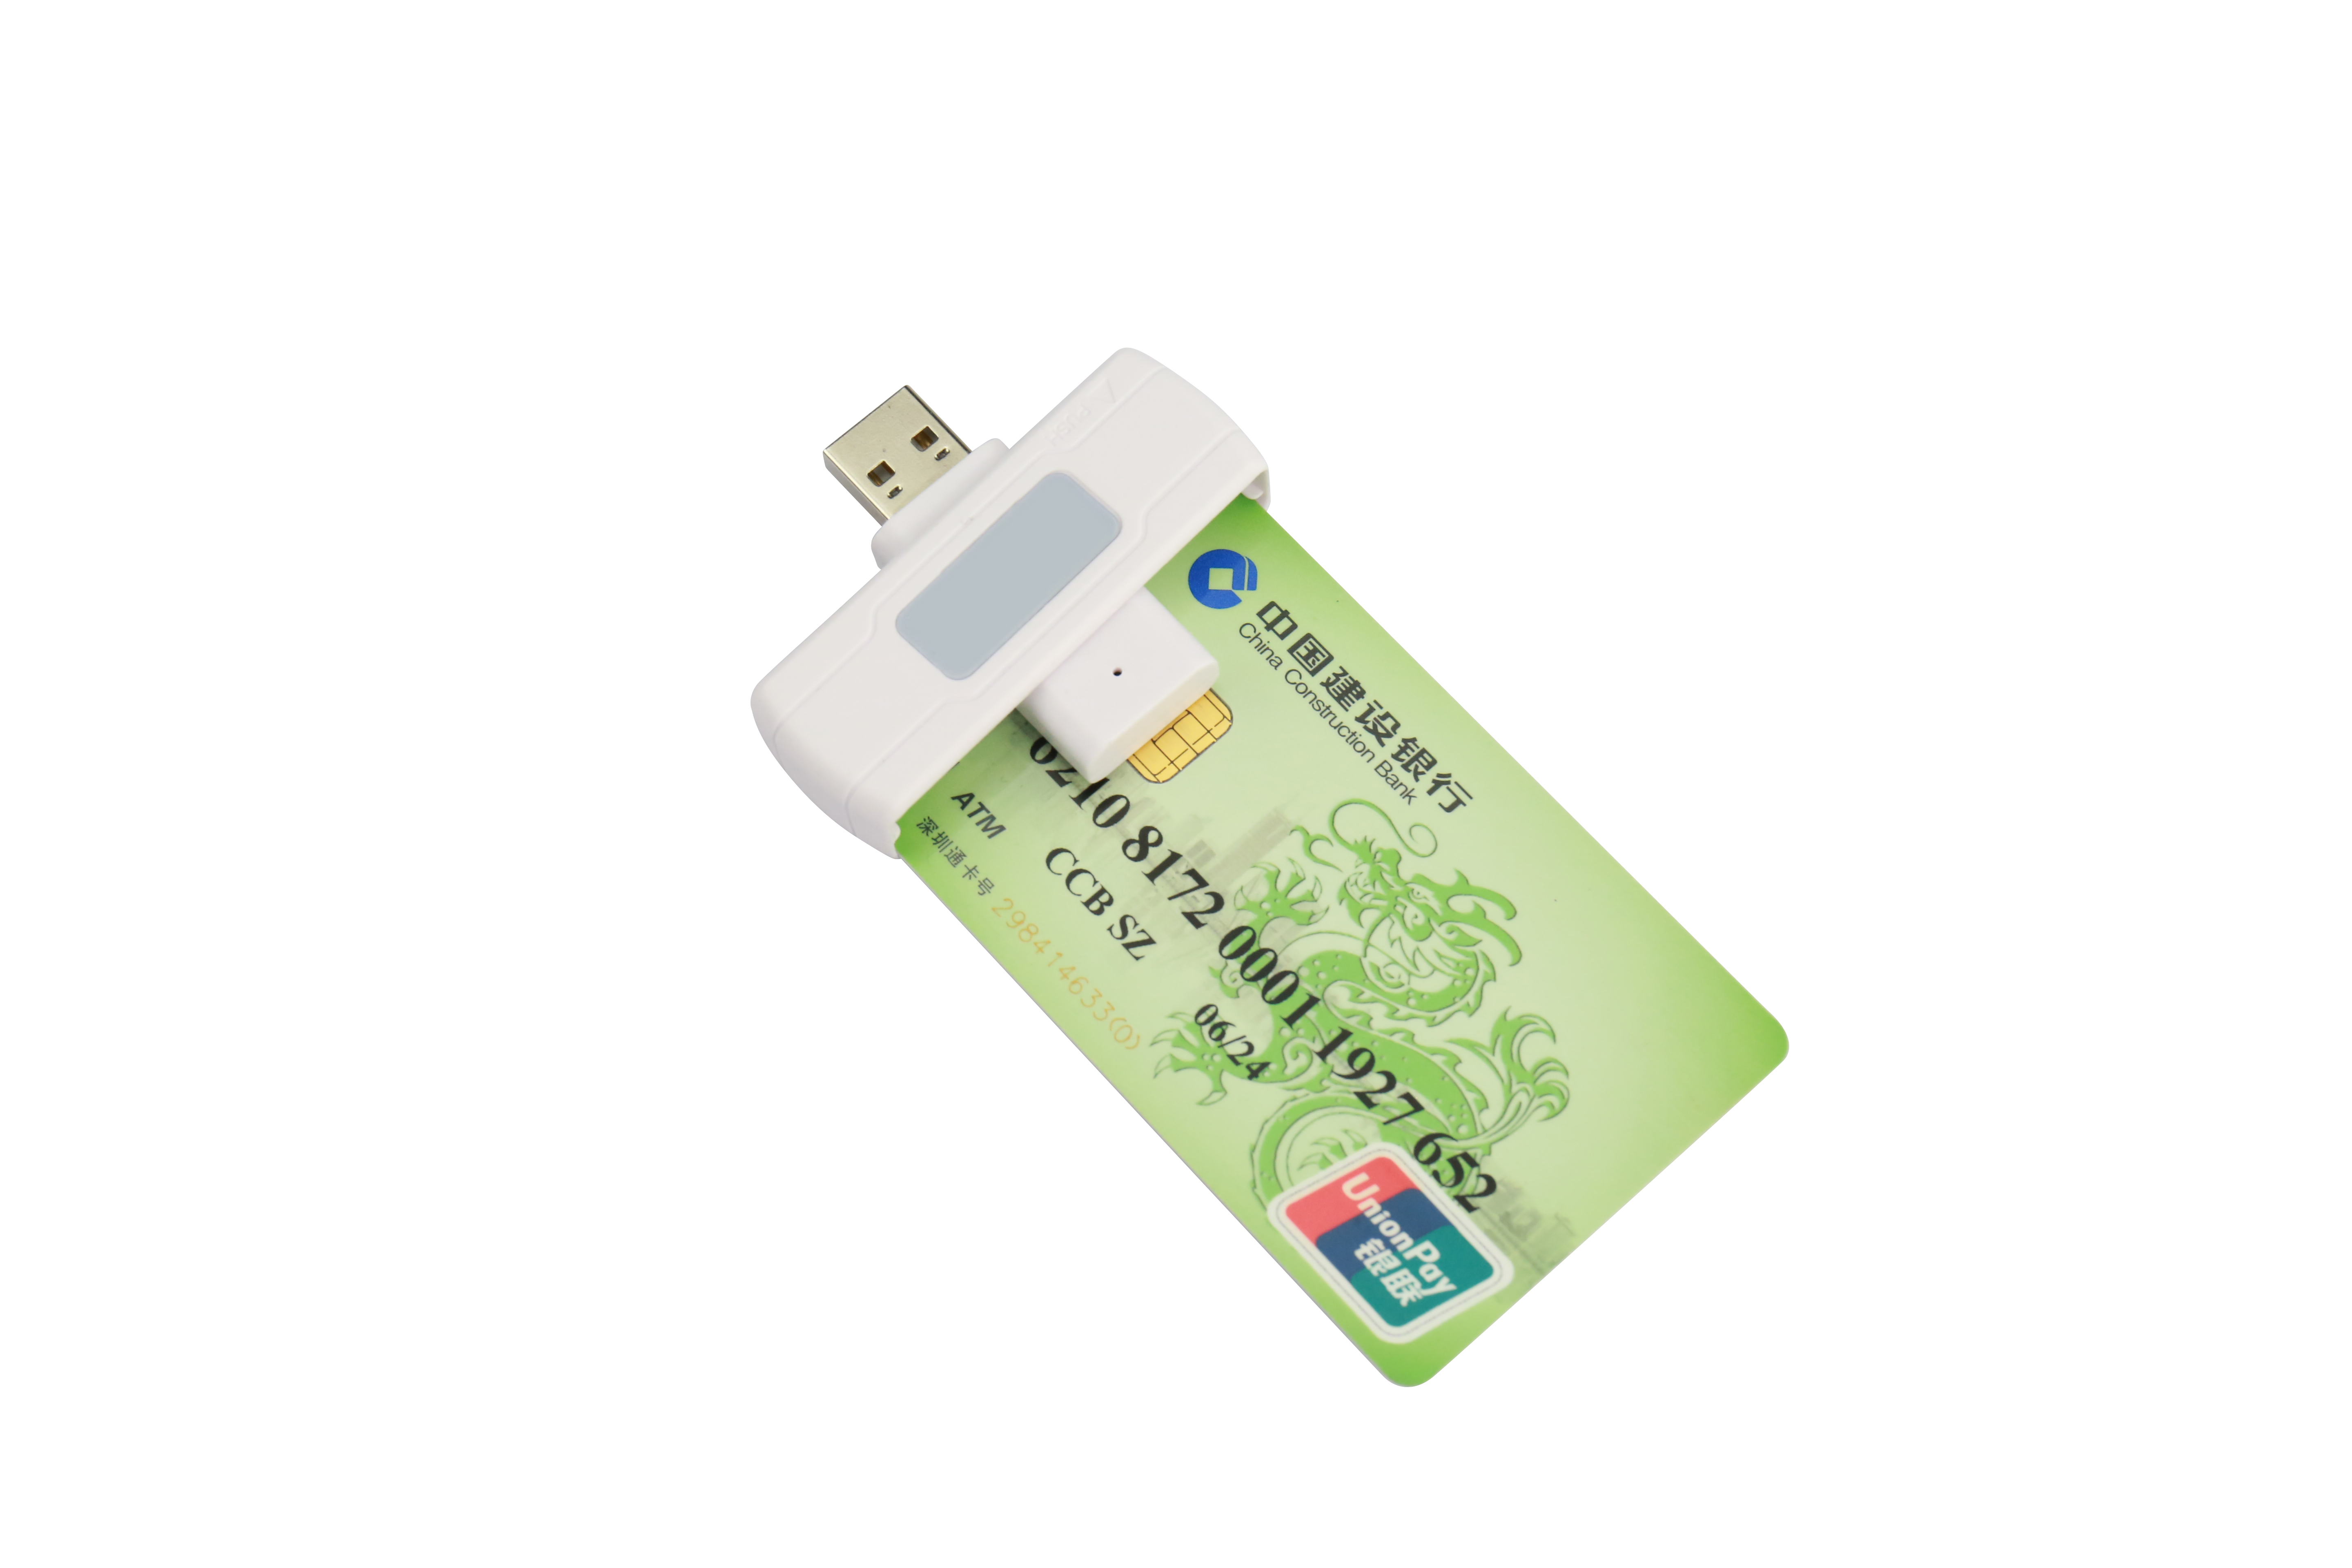 C295 Rotatable USB Smart Card Reader